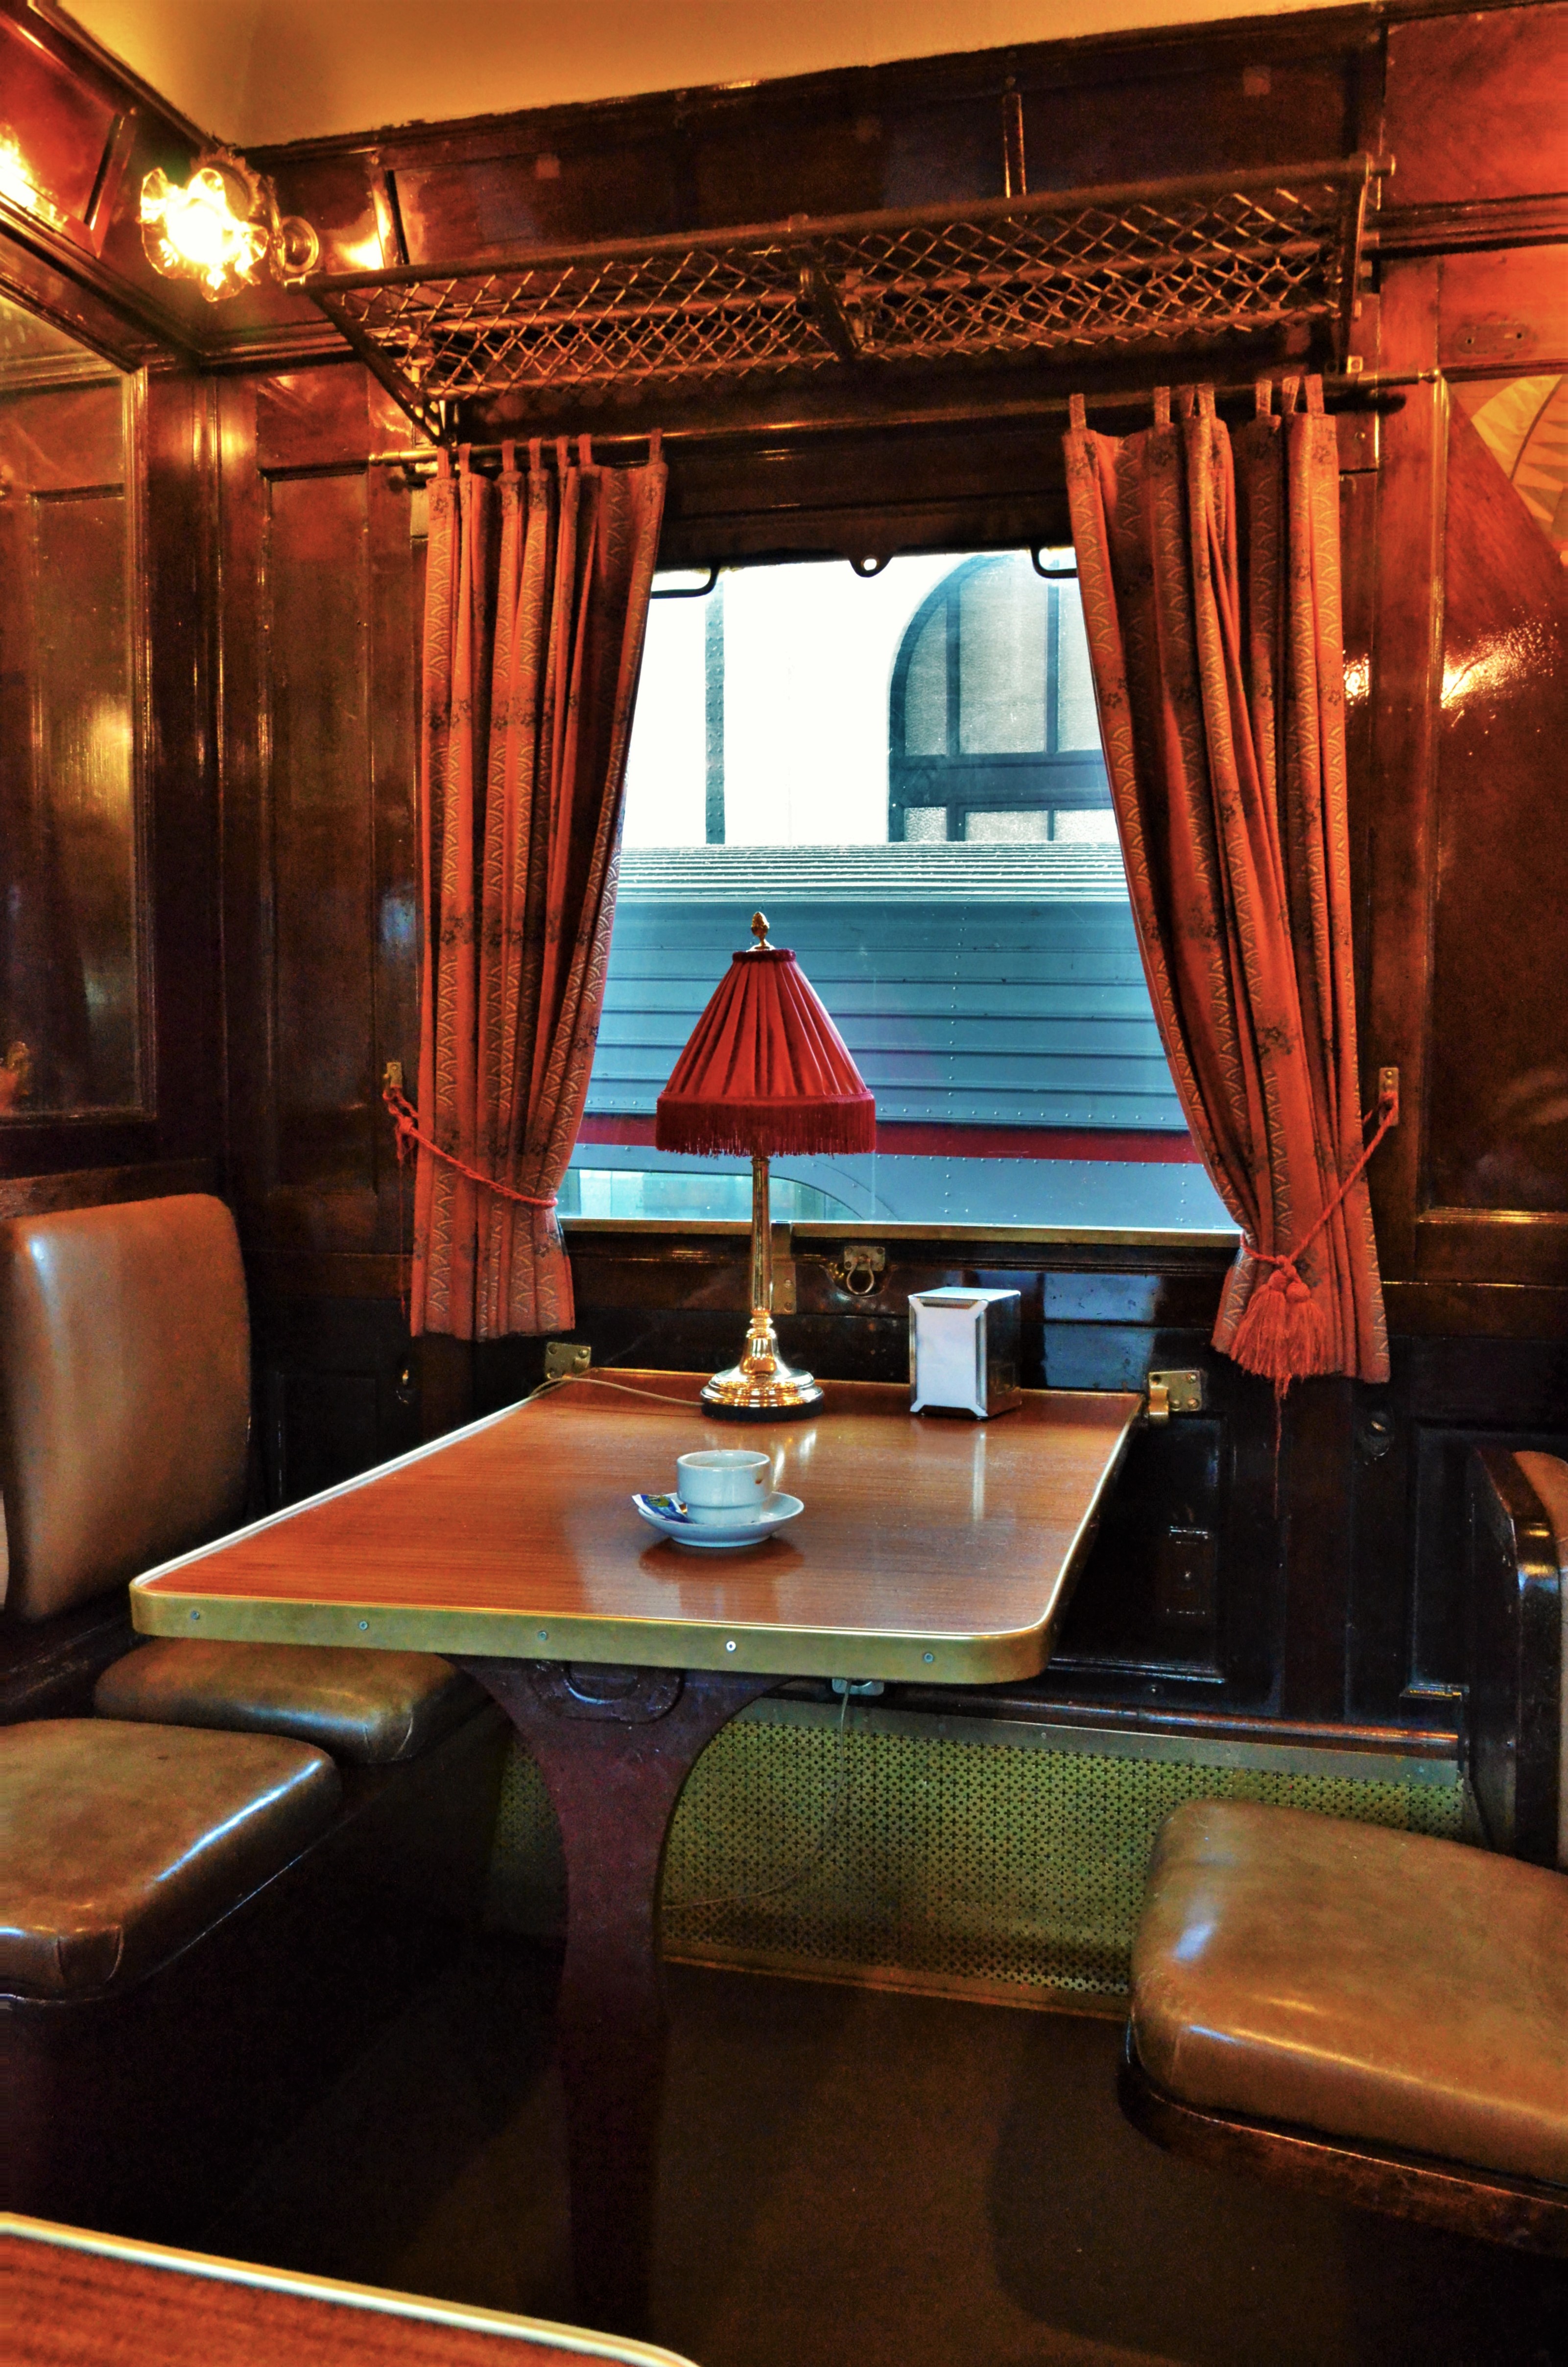 Orient Express Toilet by oneroncer on DeviantArt